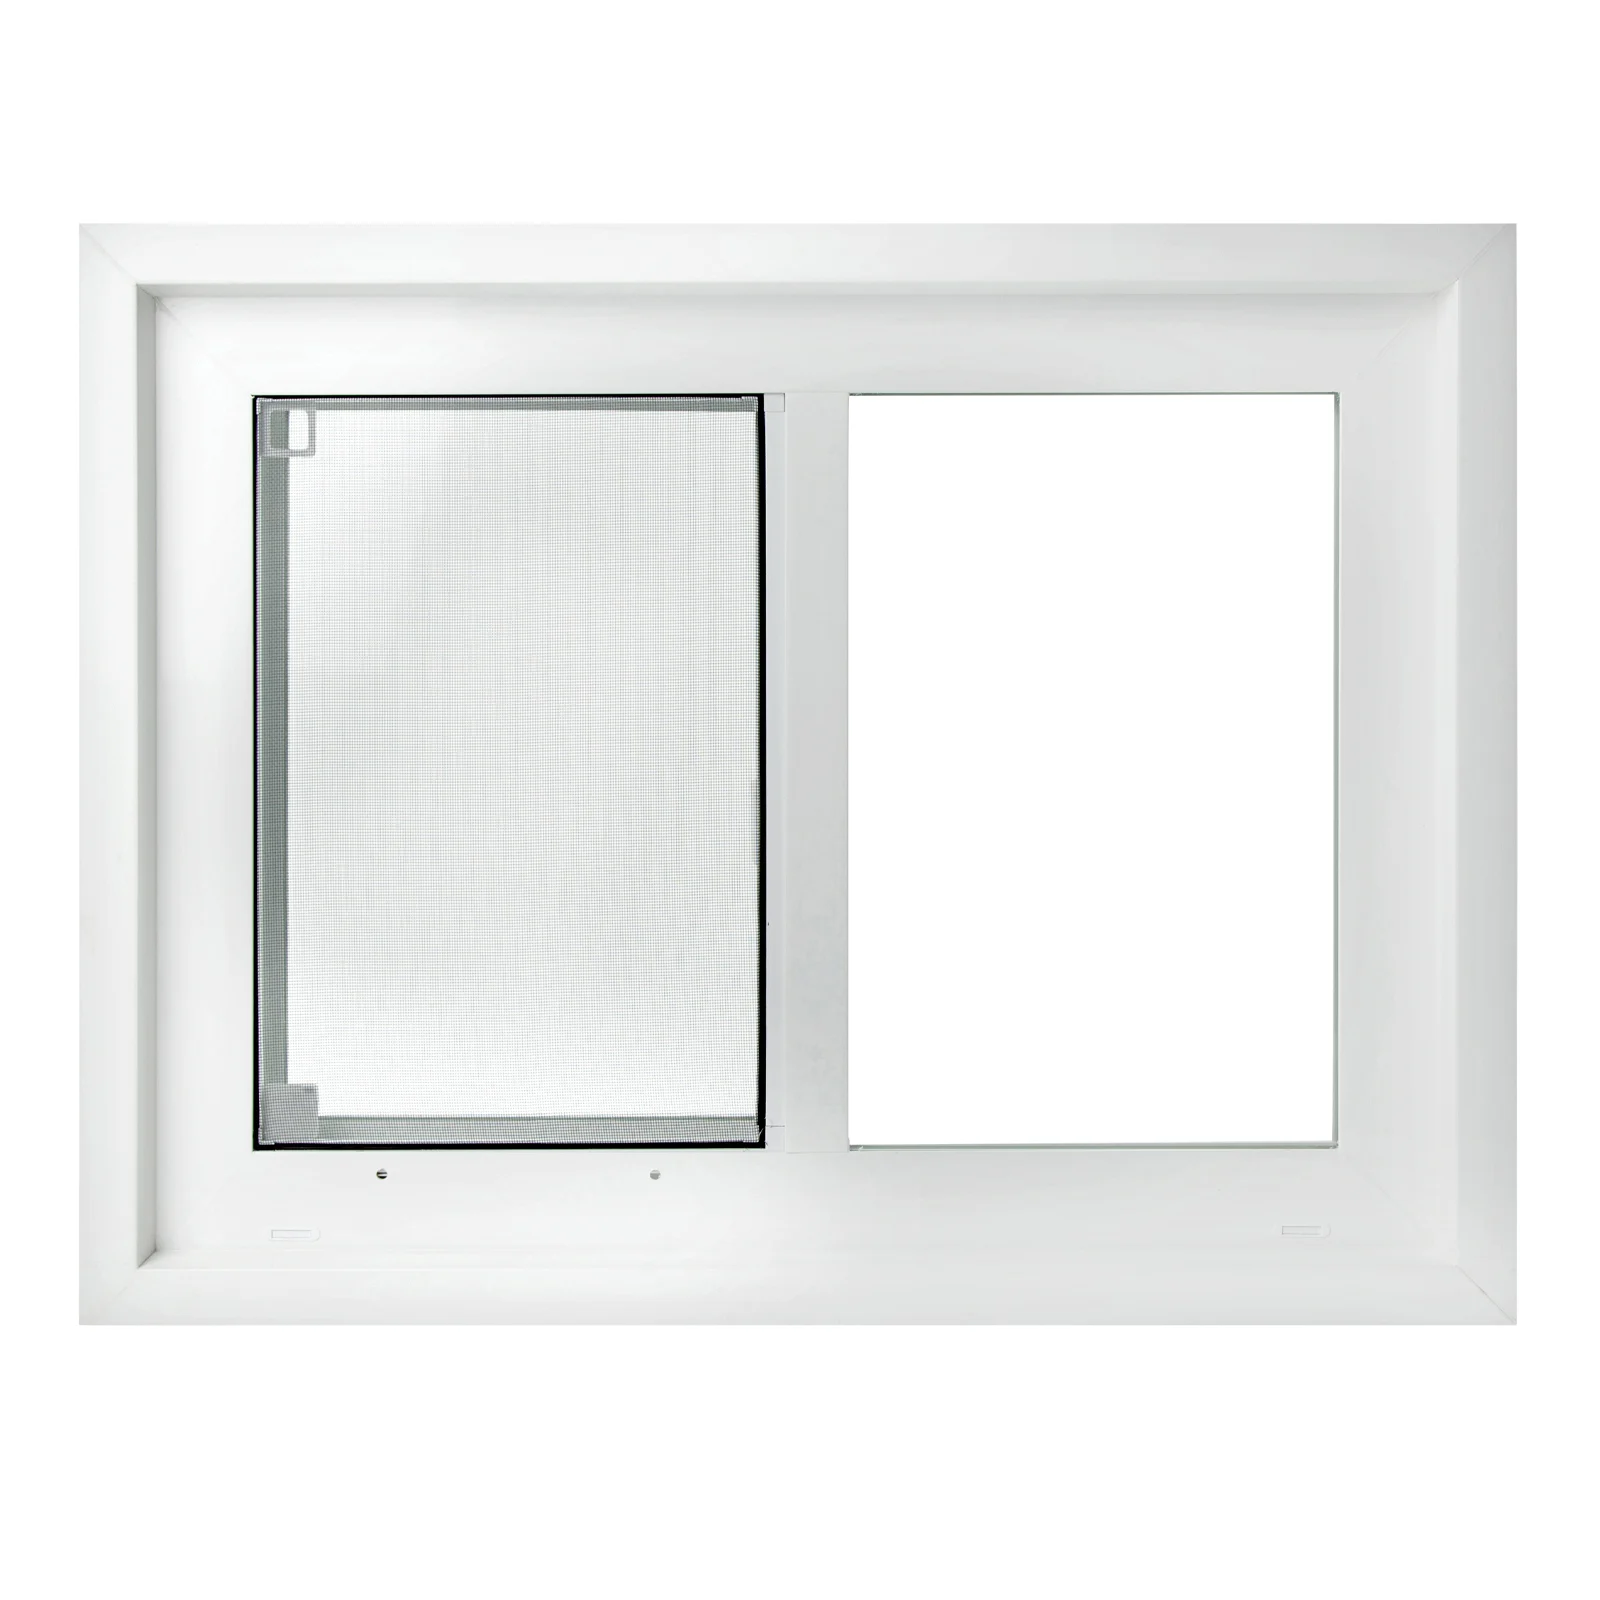 A horizontal sliding windows